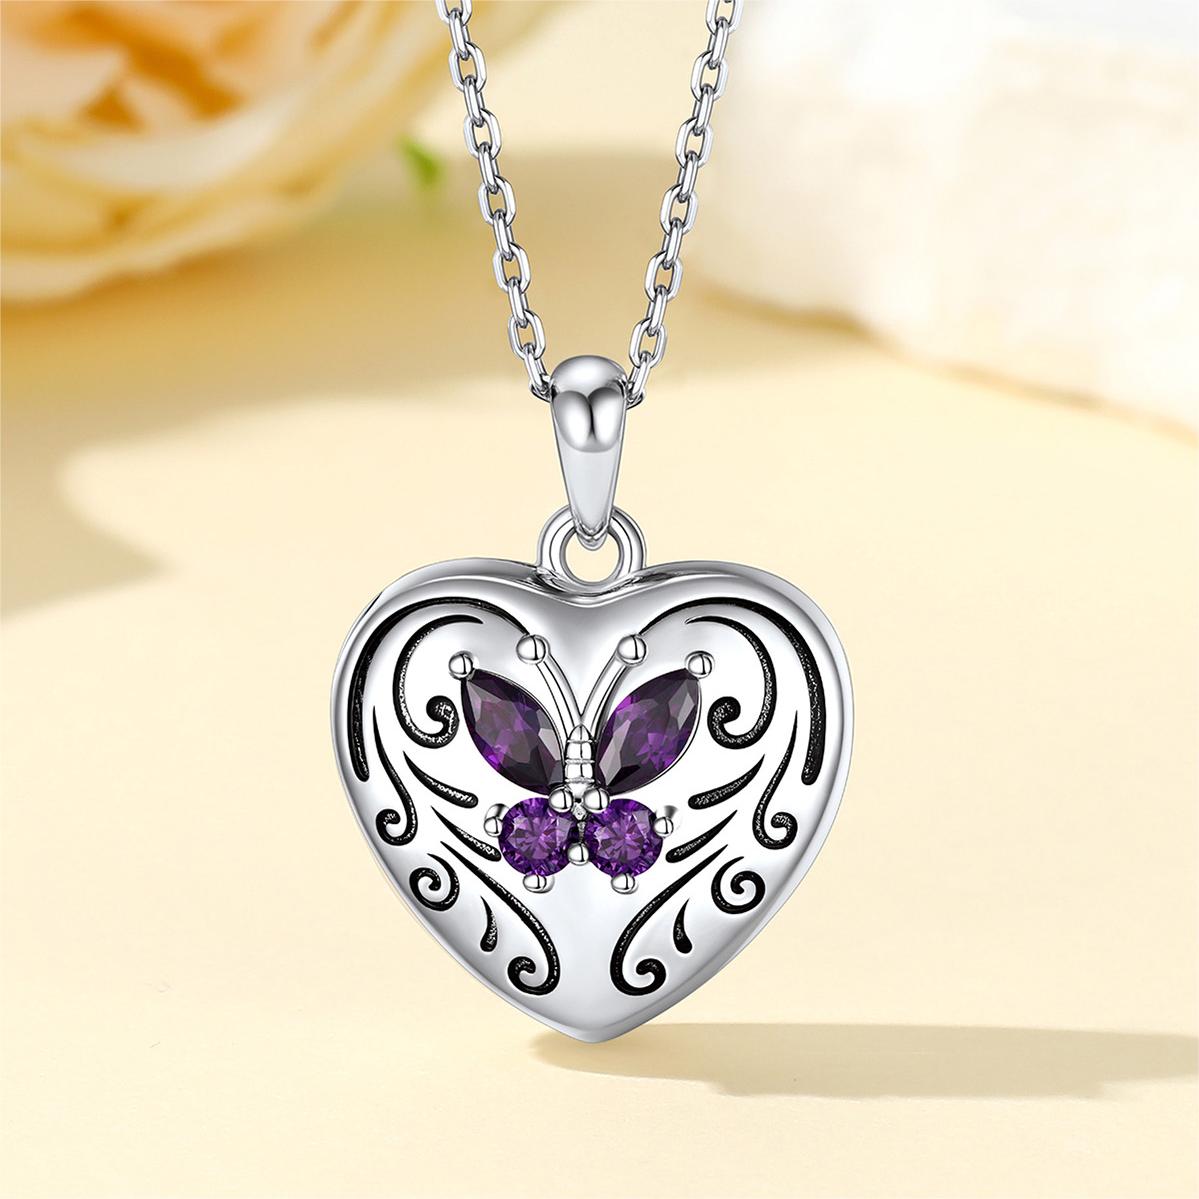 Birthstonesjewelry Personalized Heart Locket Photo Necklace for Women